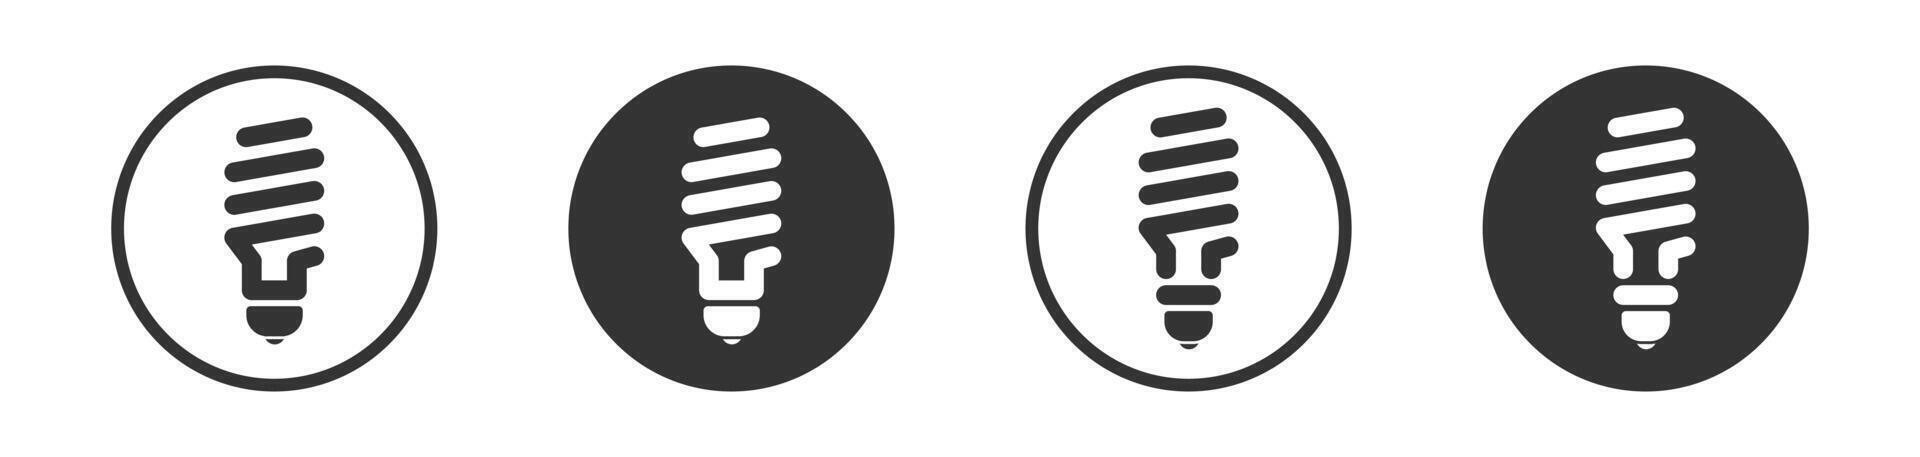 Energy saving fluorescent light bulb icon. Fluorescent lamp bulb sign icon. Vector illustration.